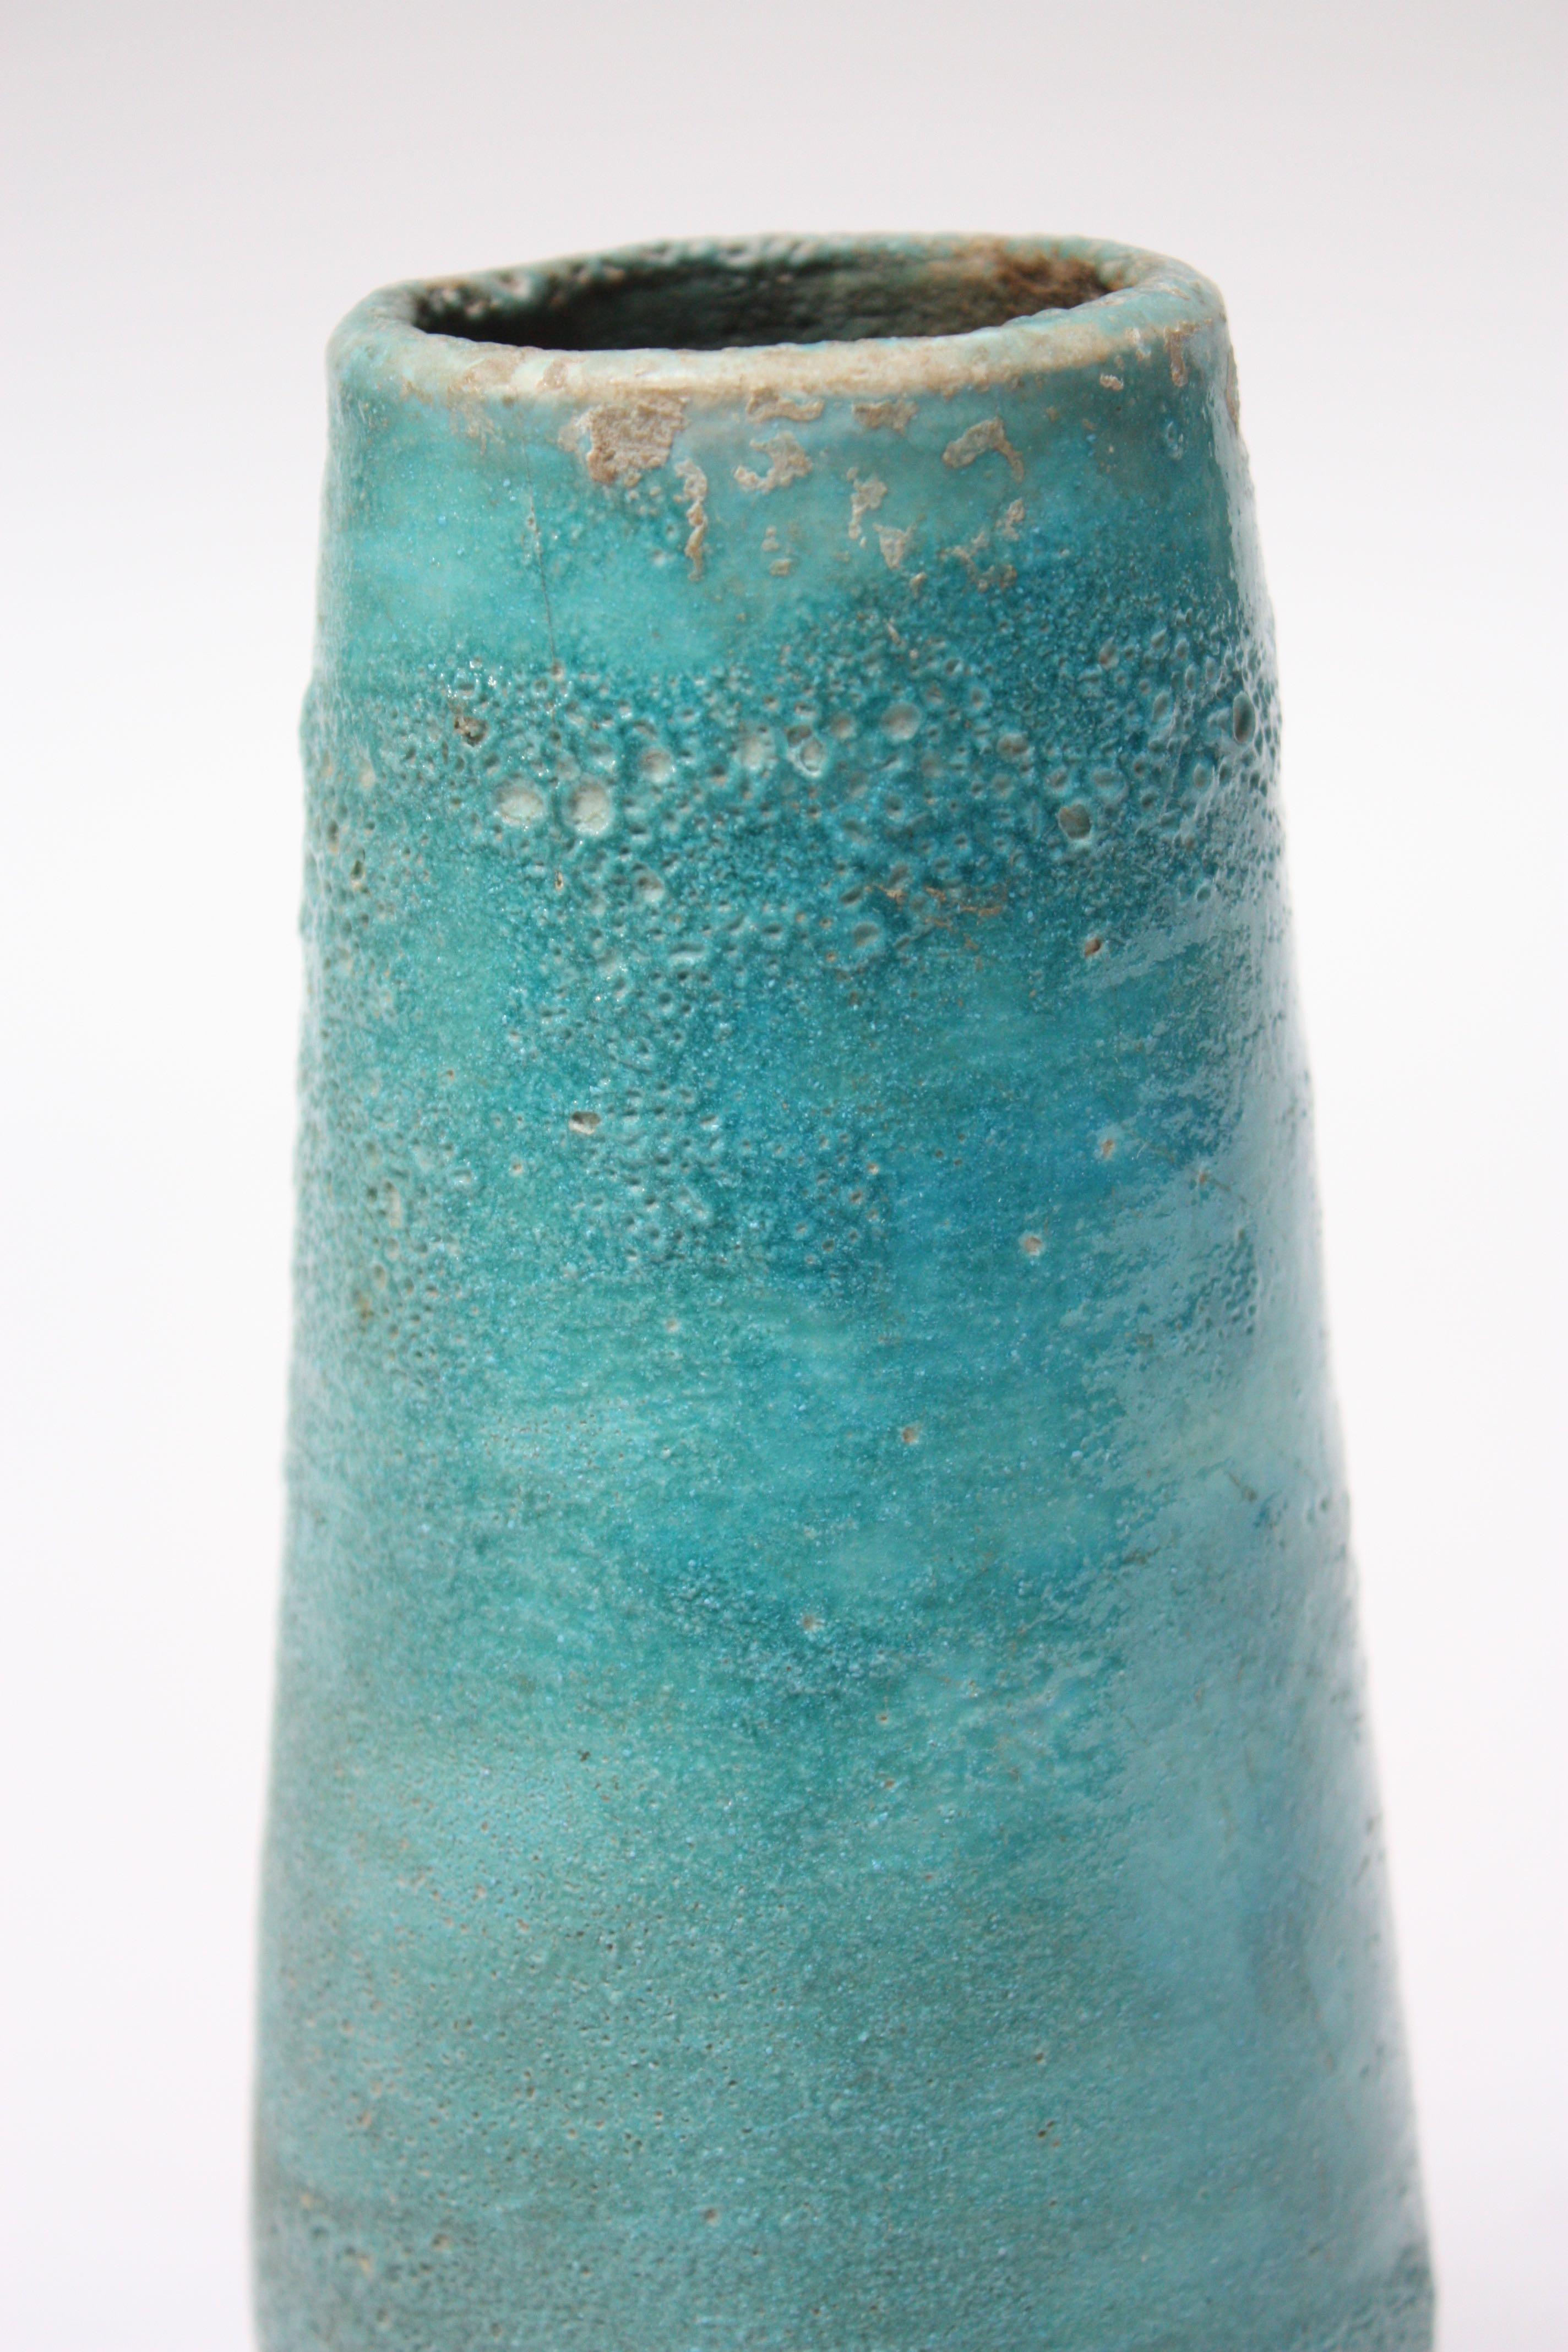 Ceramic Studio Pottery Volcanic-Texture Vase by Mark Keram in Turquoise